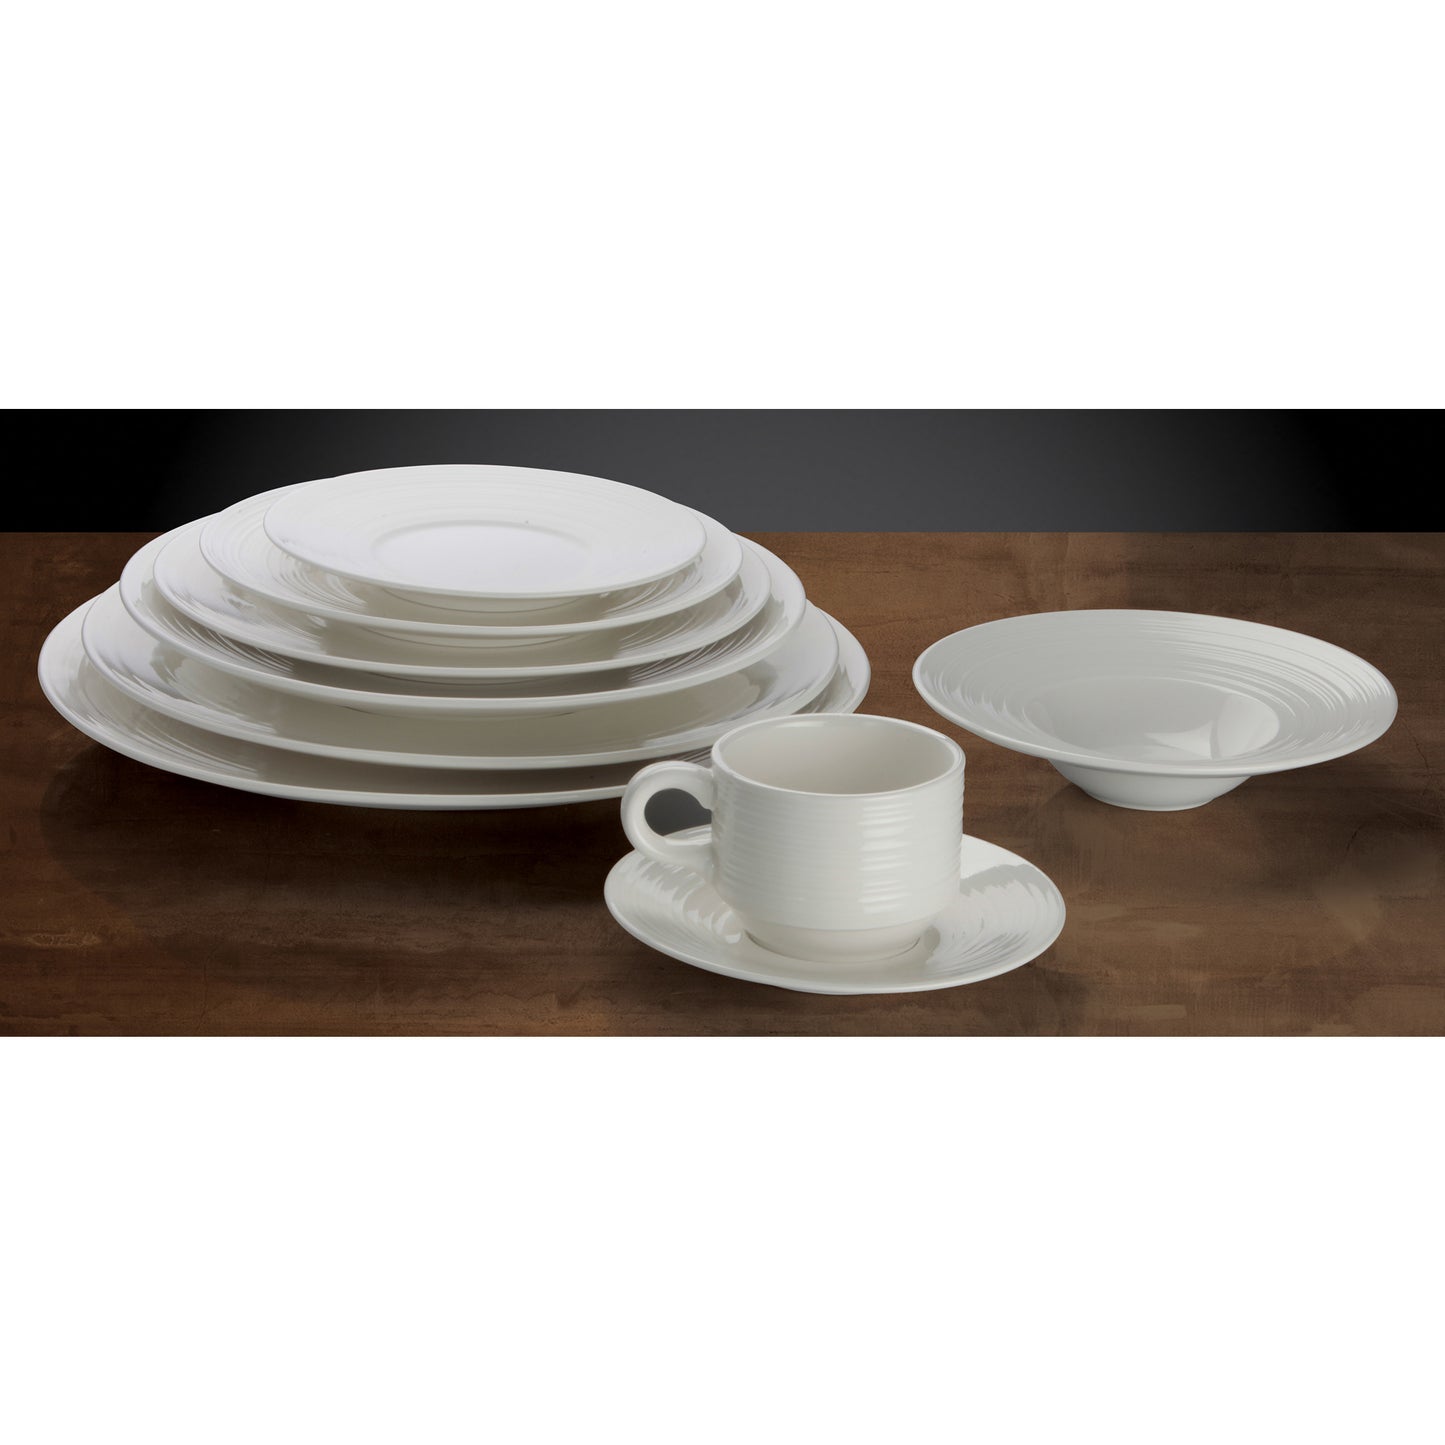 WDP022-109 - 11-1/8"Dia. Porcelain Round Plate, Bright White, 12 pcs/case